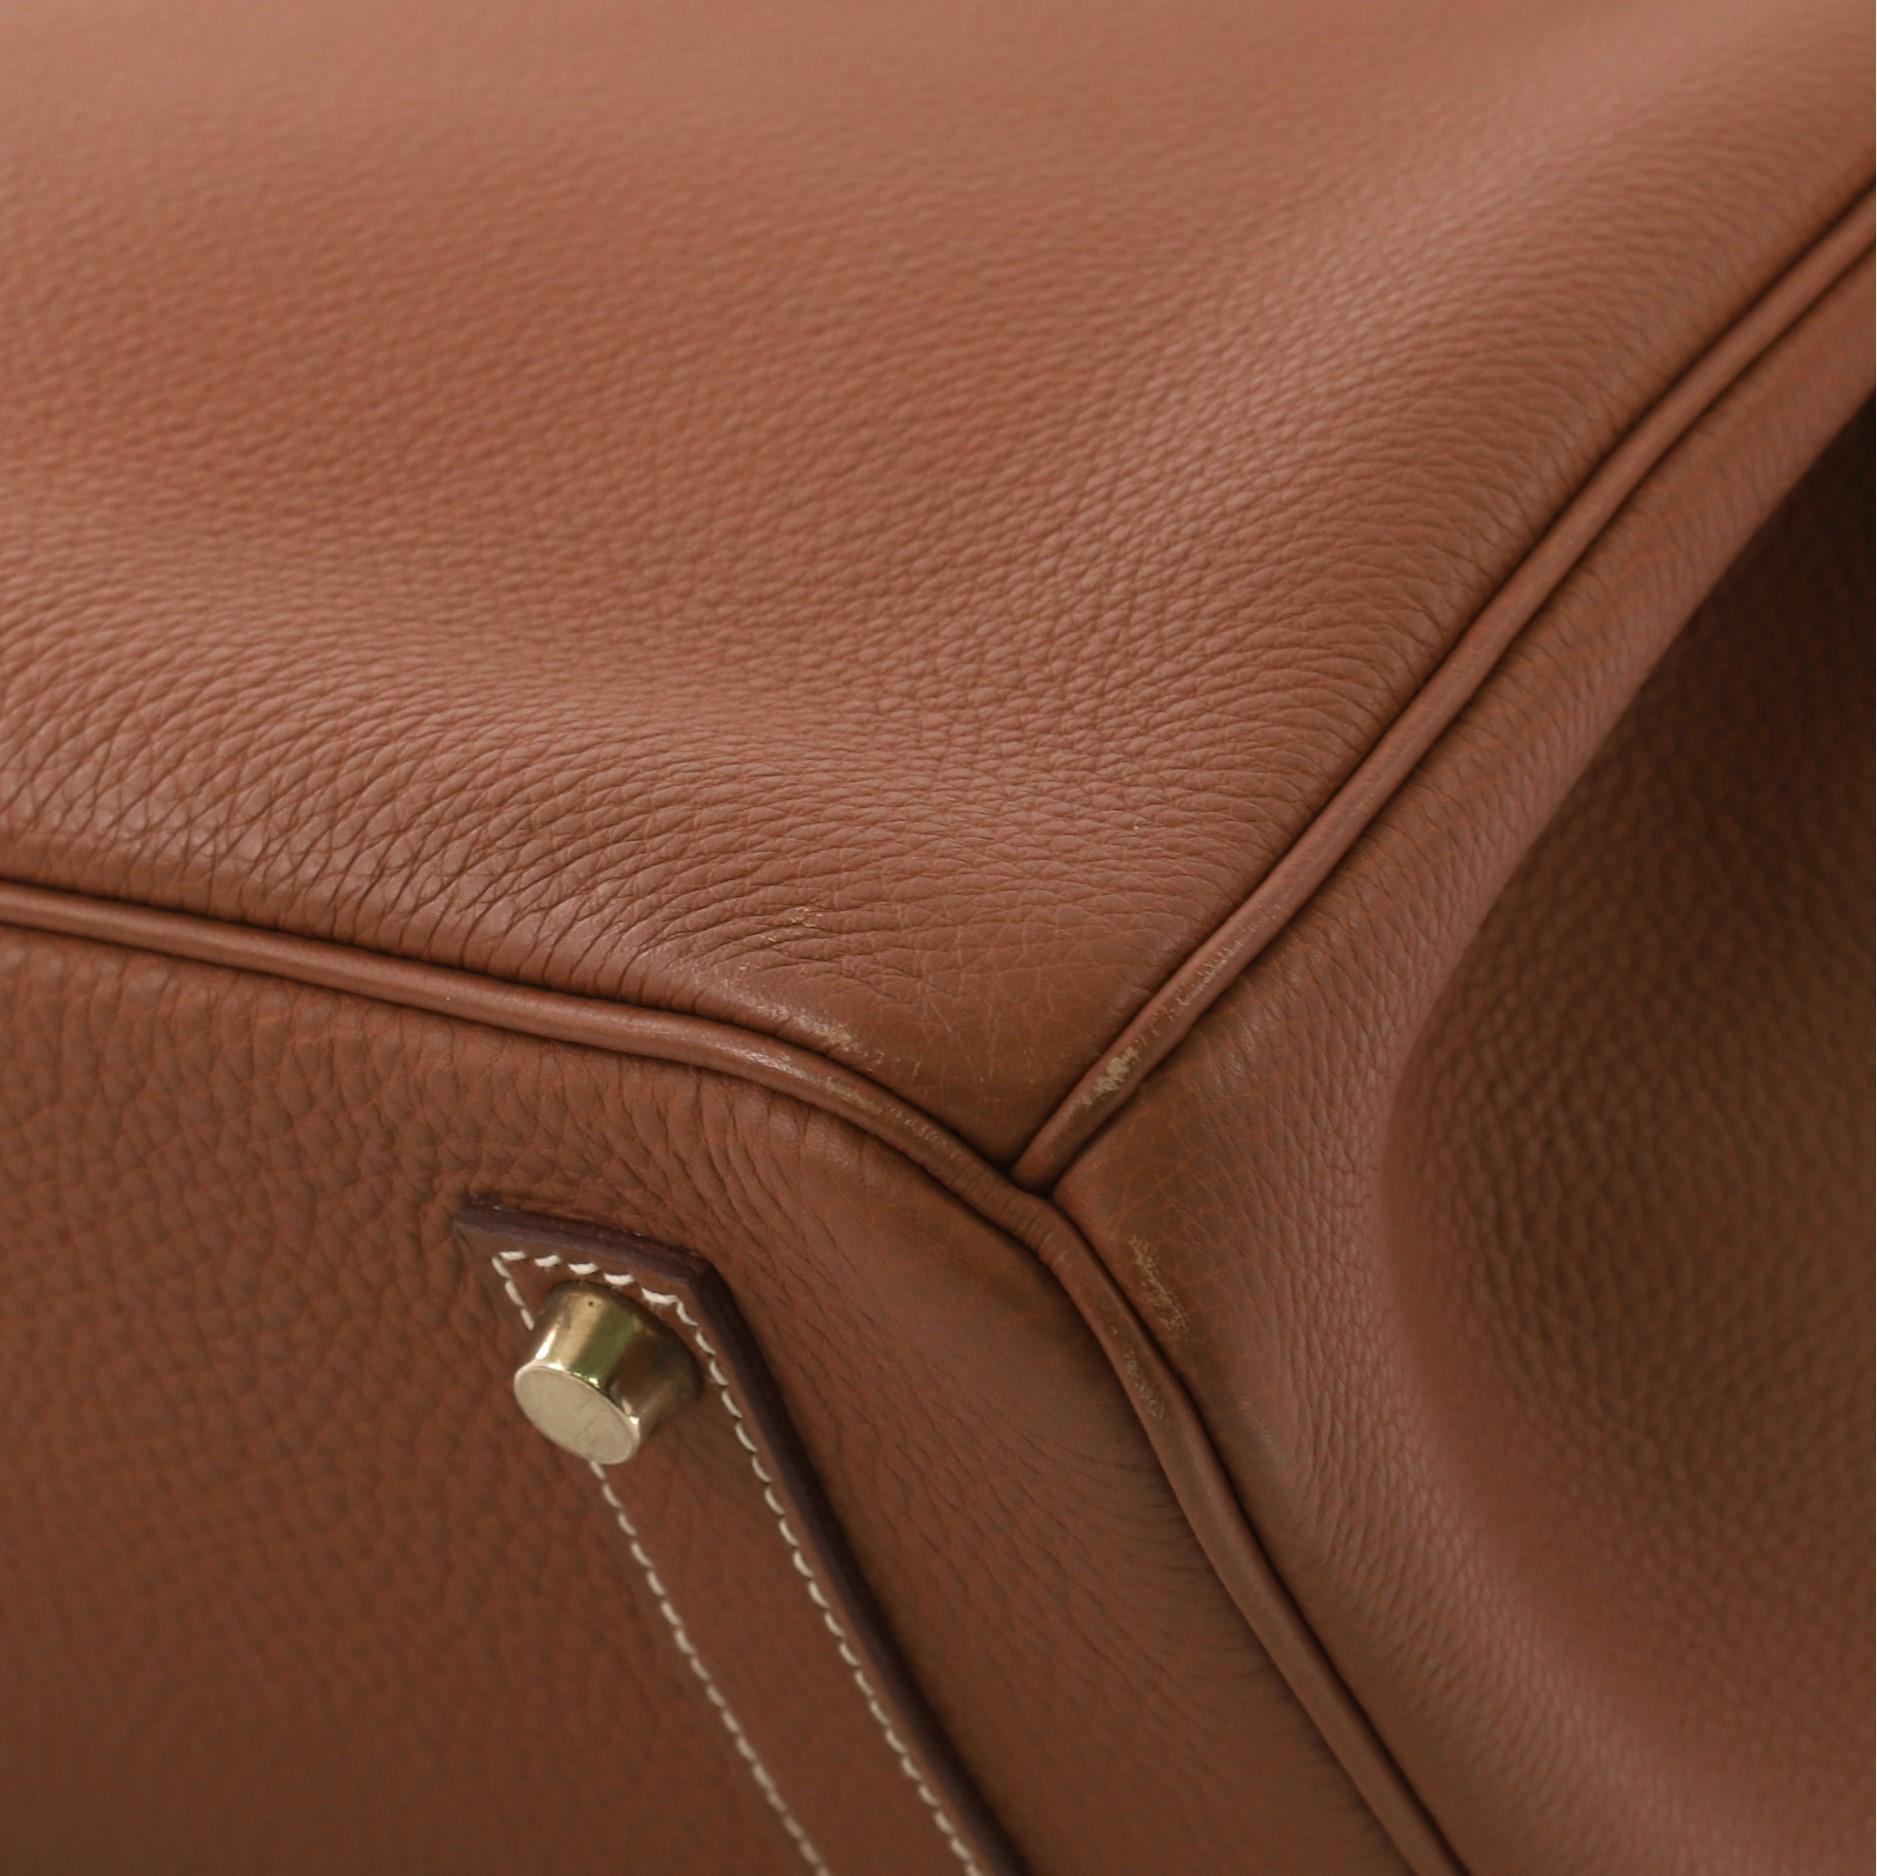 Hermes Birkin Handbag Gold Togo with Gold Hardware 35 4